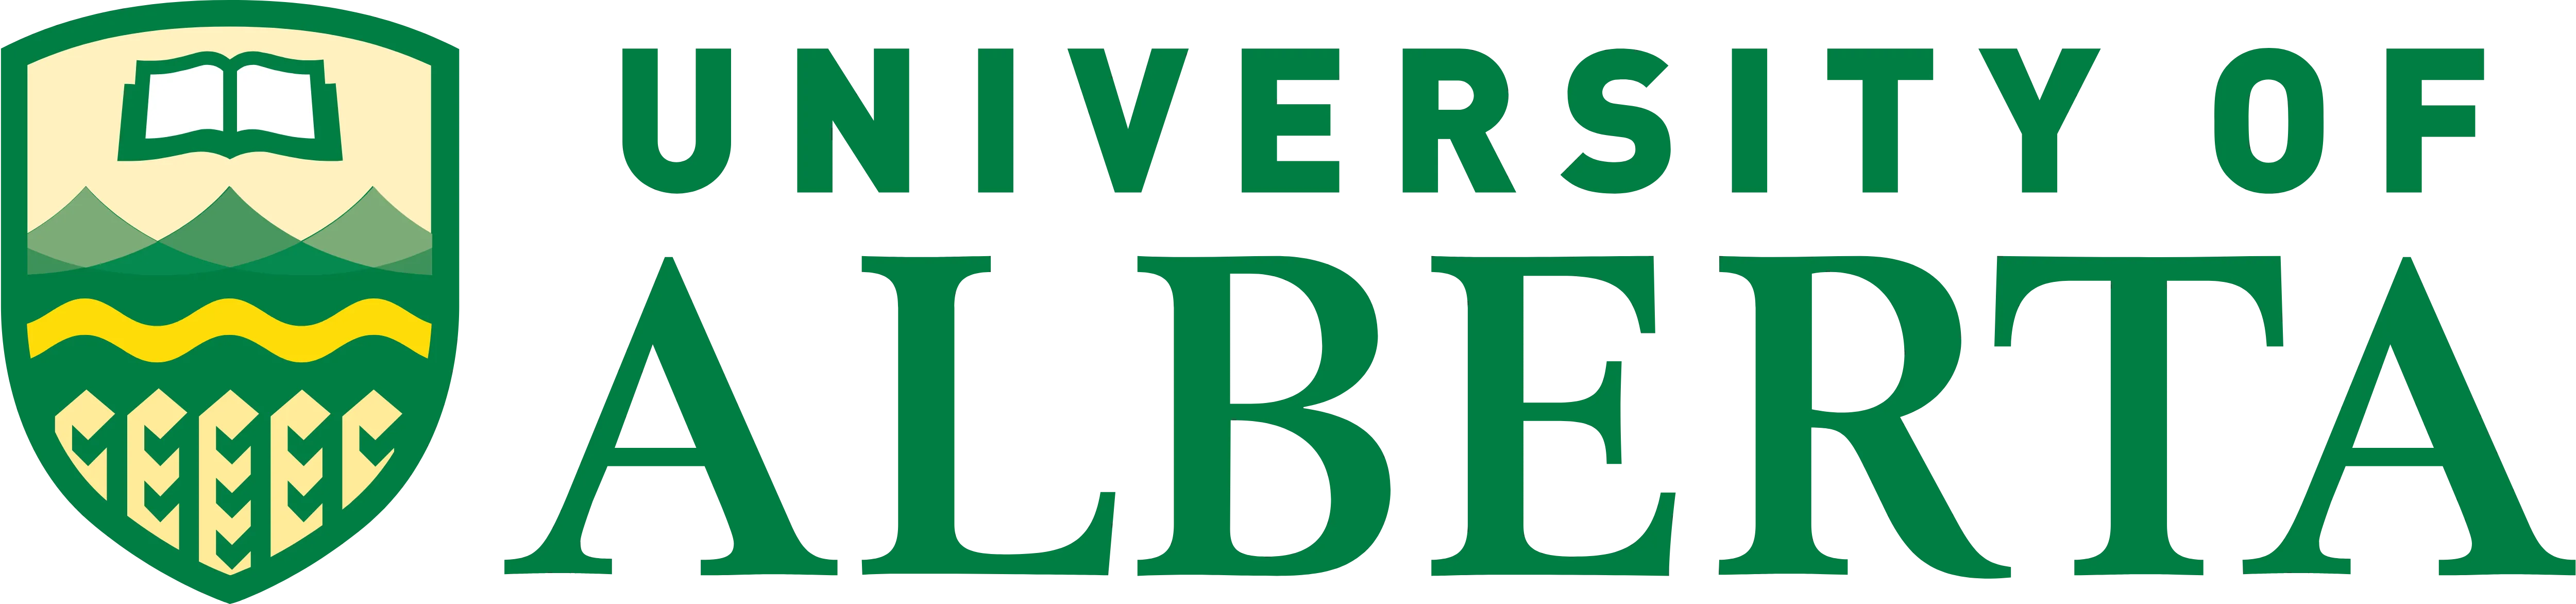 university-of-alberta-logo